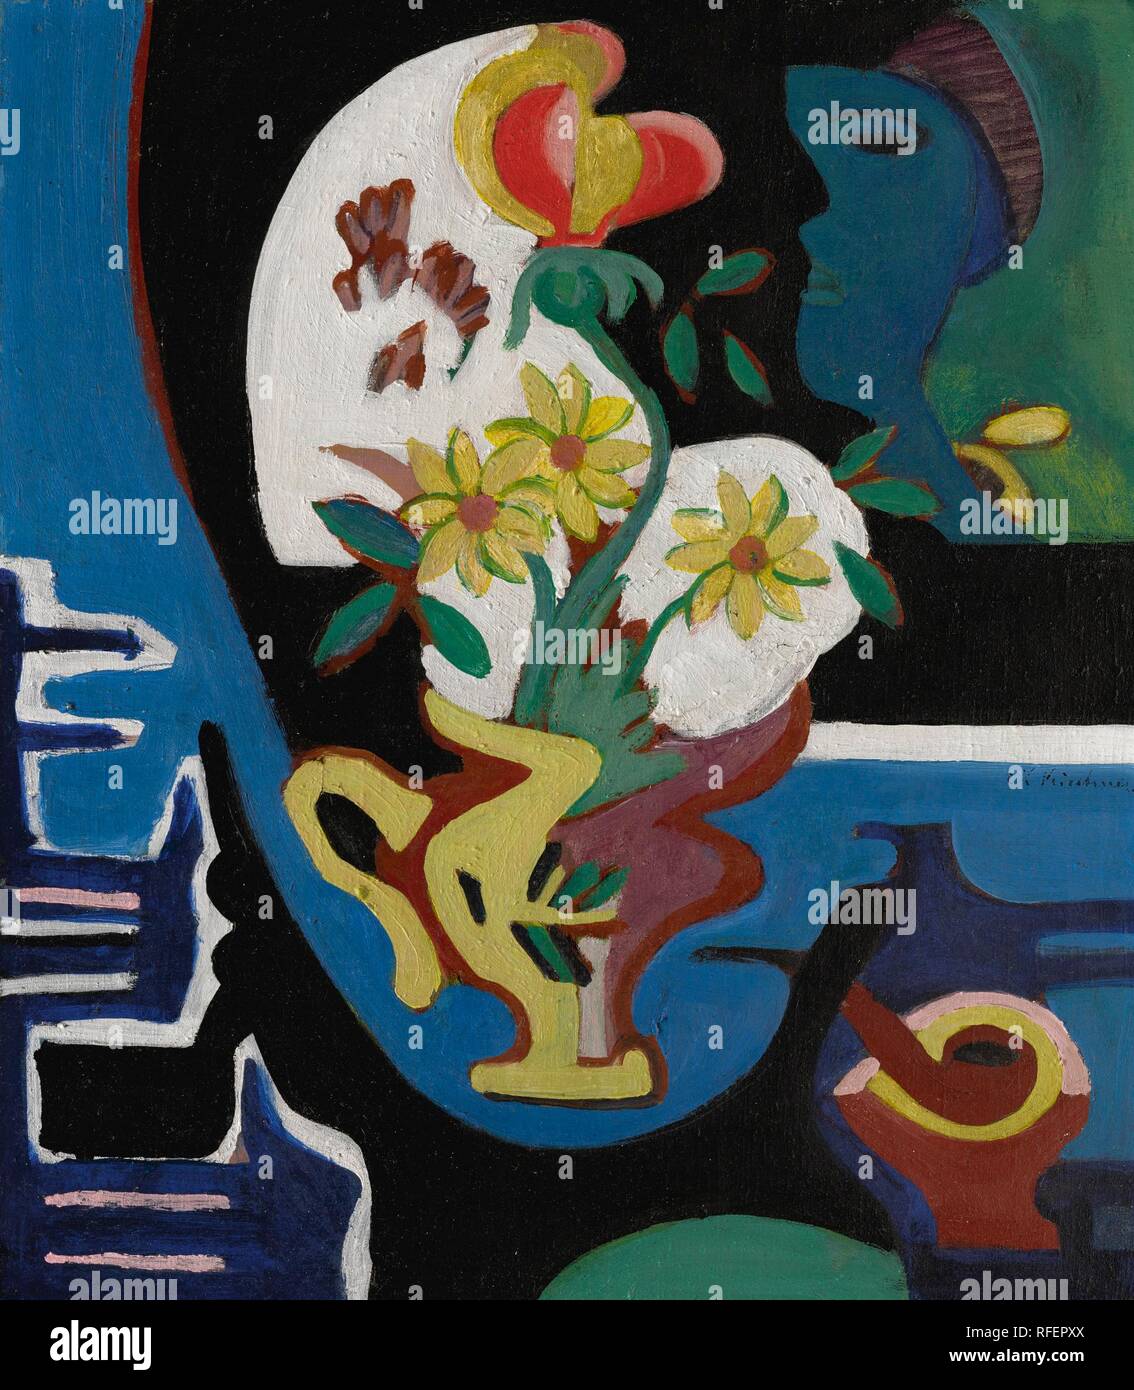 Ernst Ludwig Kirchner 1880 - 1938 BLUMENVASE (STILL LIFE WITH FLOWERS).jpg - RFEPXX Stock Photo